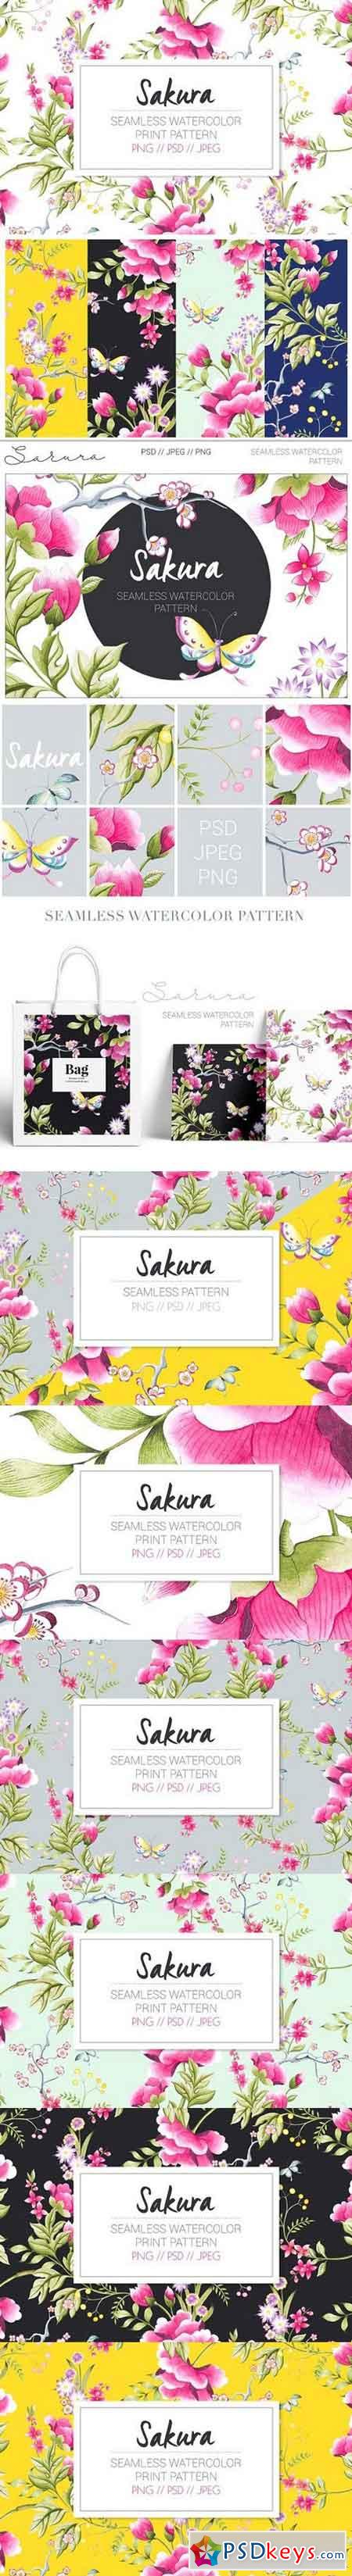 Sakura, a watercolor seamless print. 1697614